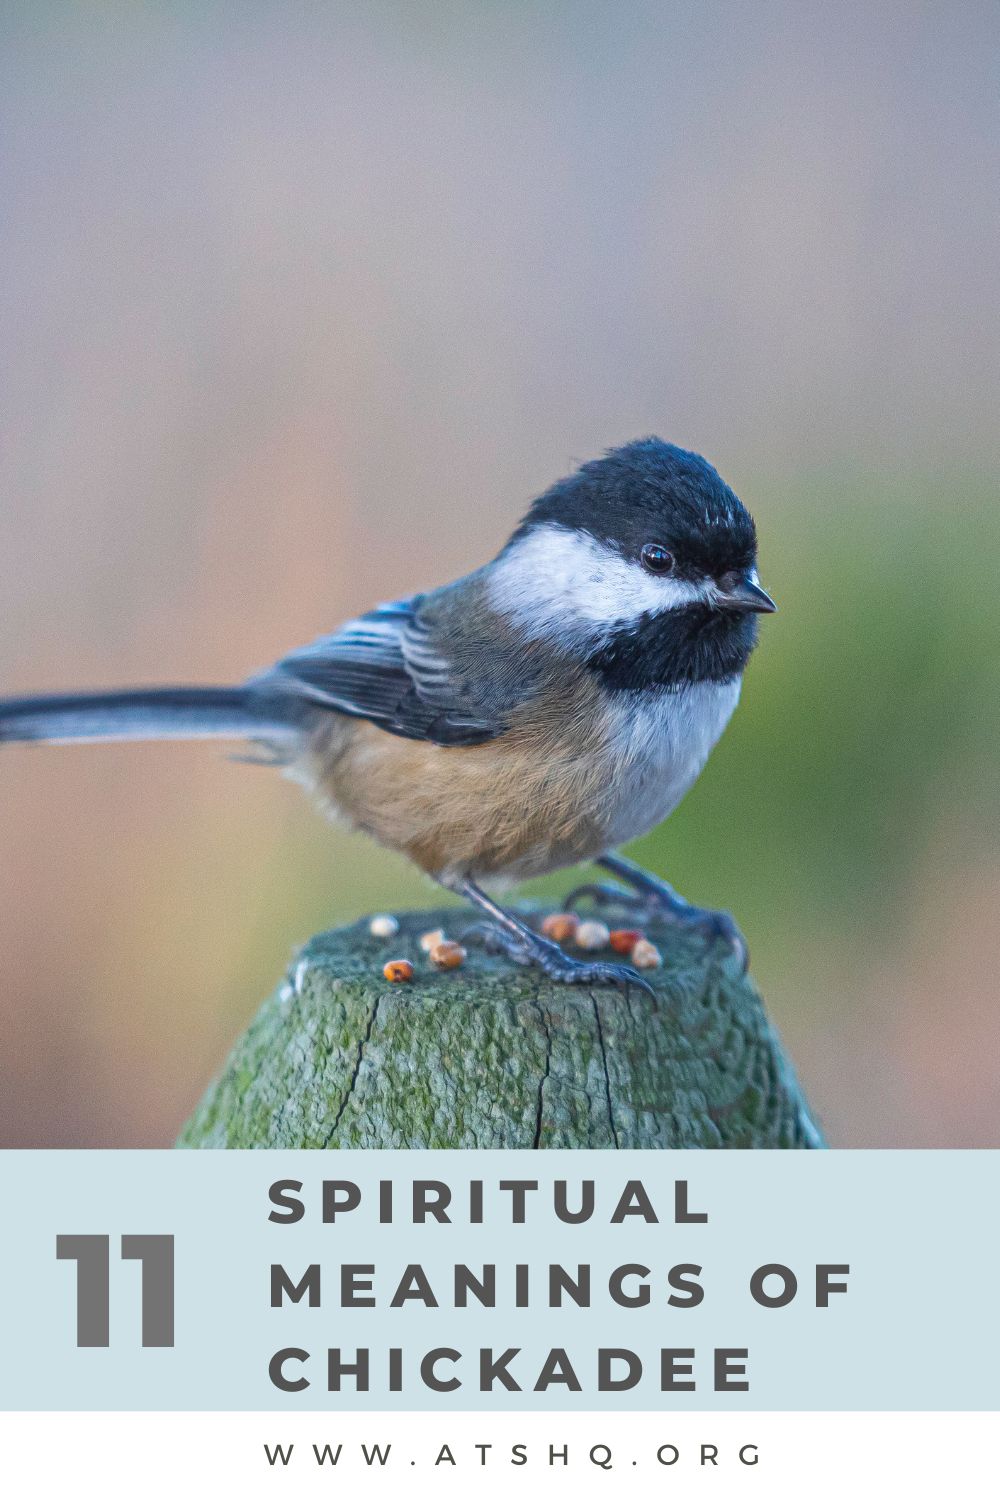 11 Spiritual Meanings of Chickadee